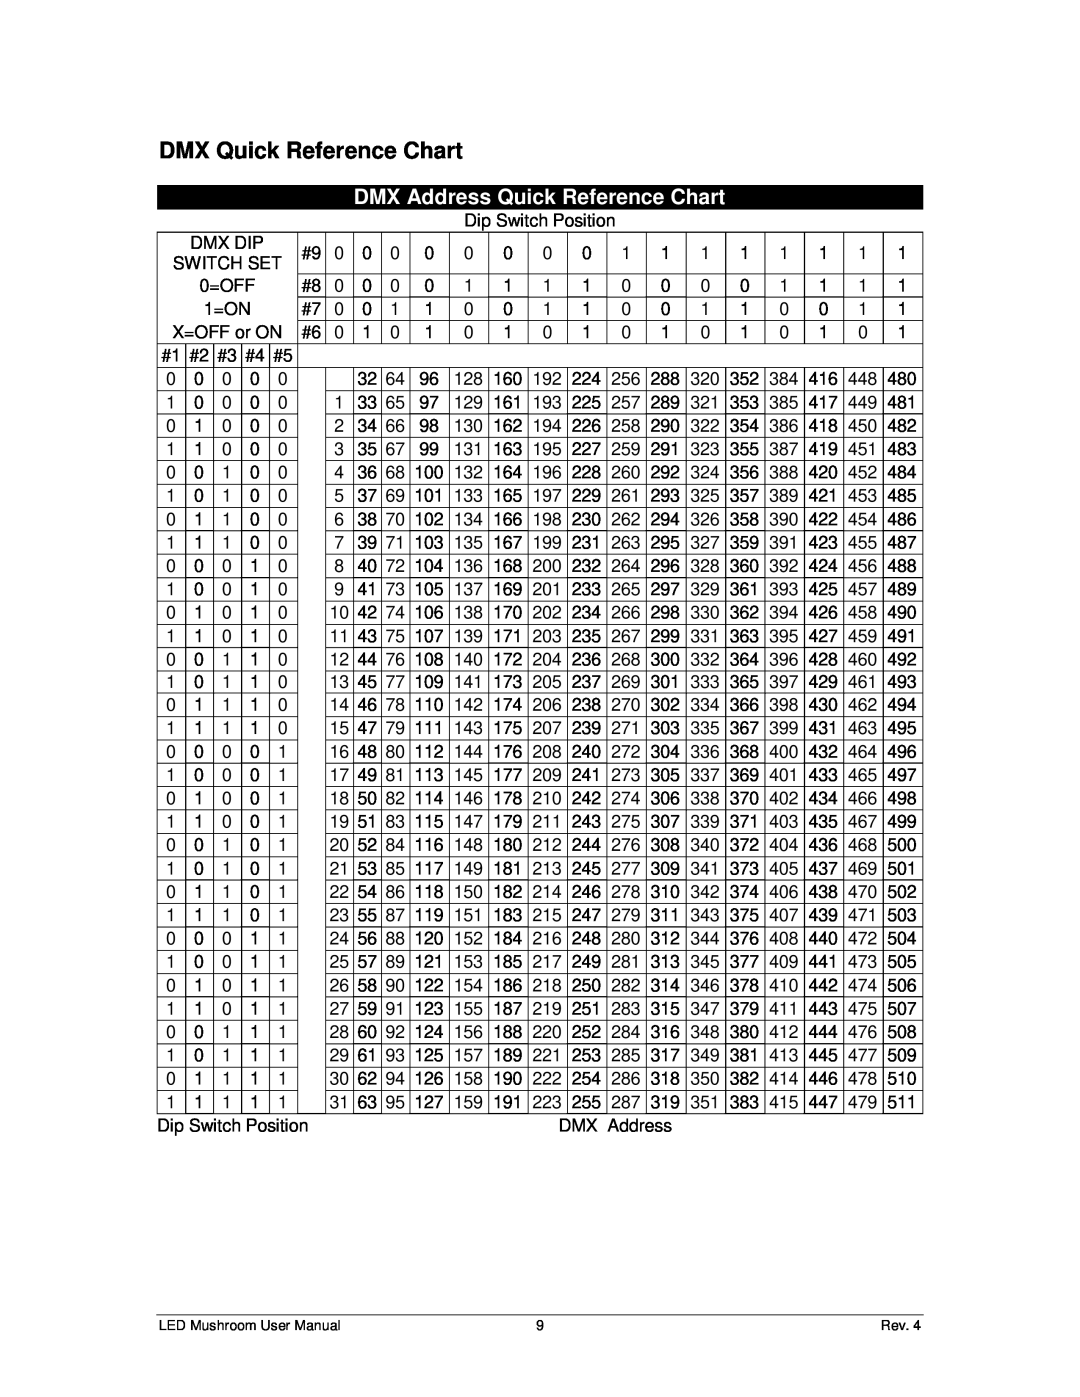 Chauvet DMX512 user manual DMX Quick Reference Chart, DMX Address Quick Reference Chart 